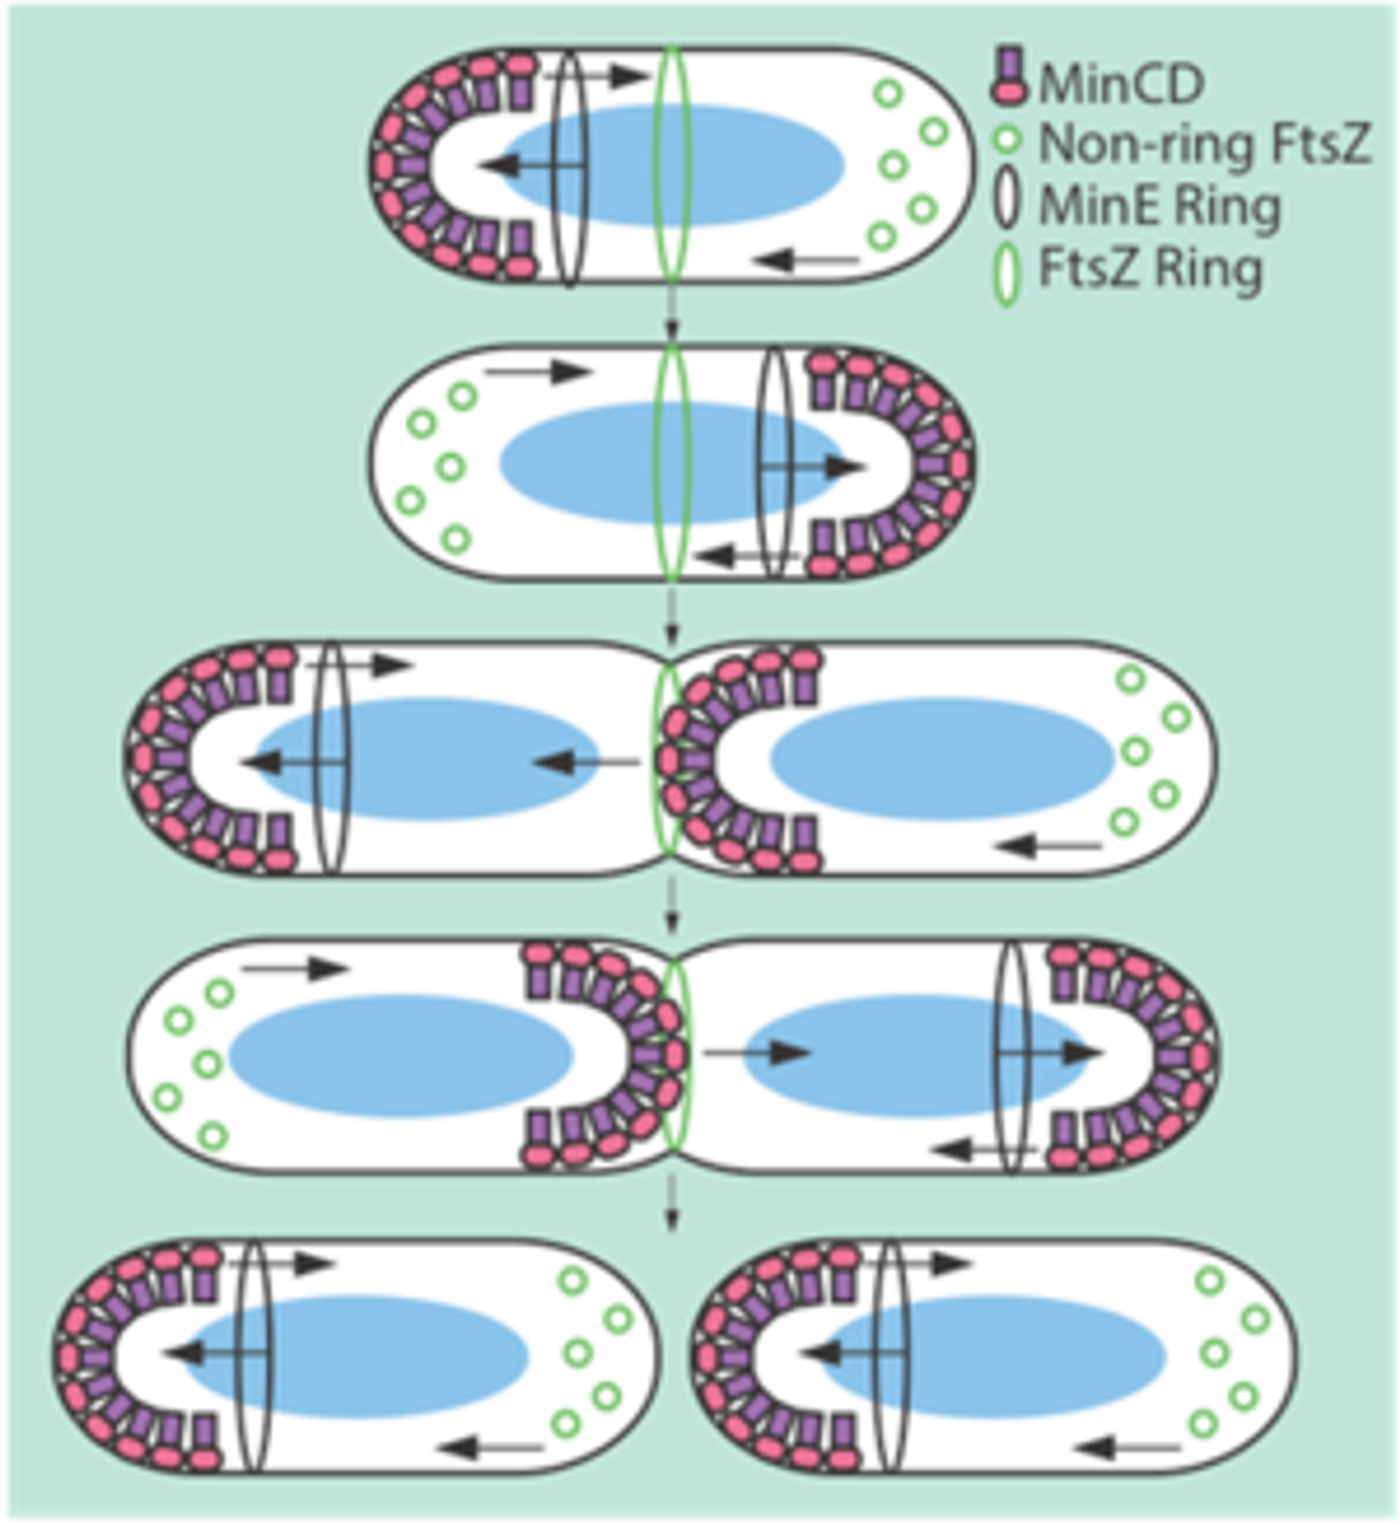 The Min system inhibits FtsZ ring formation.